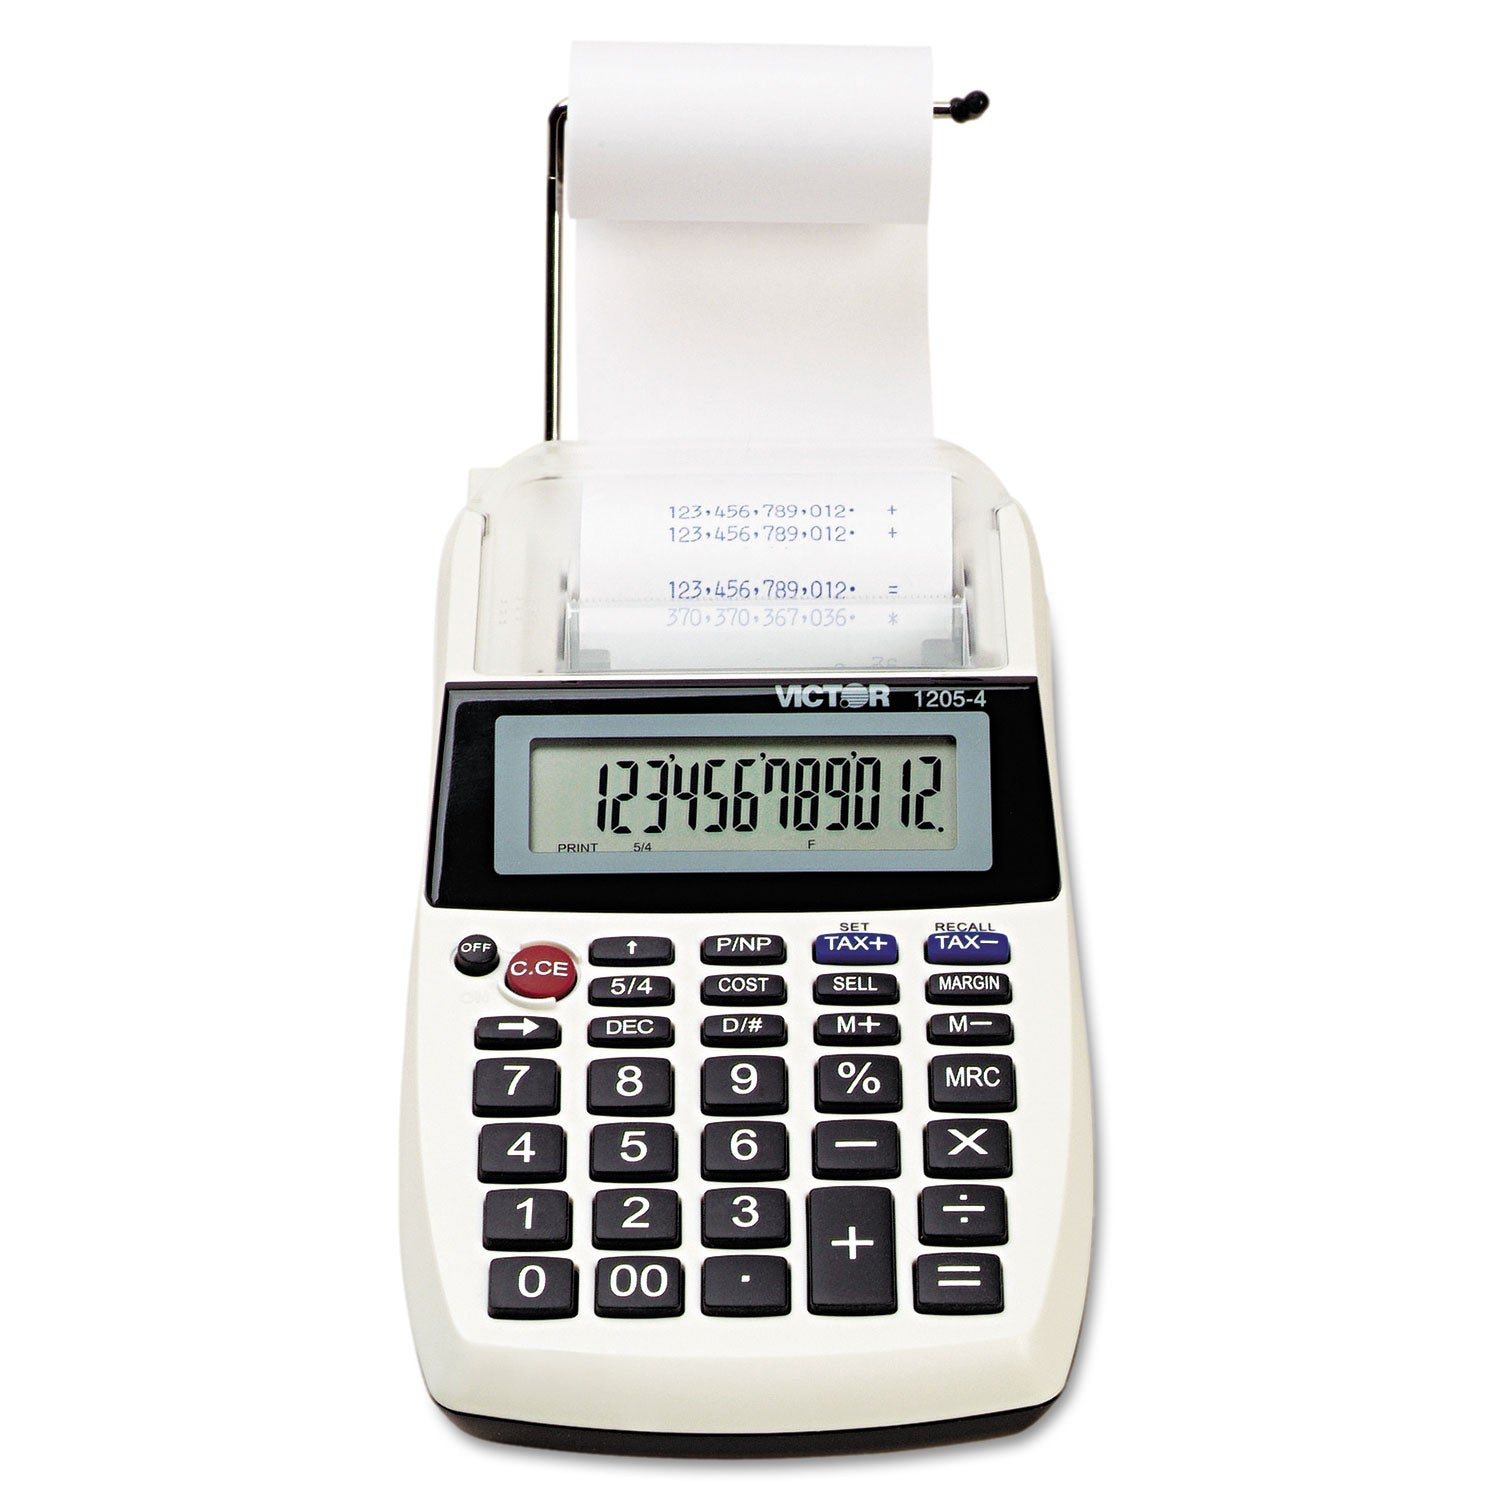 1205-4 Palm/Desktop One-Color Printing Calculator, Black Print, 2 Lines/Sec - 